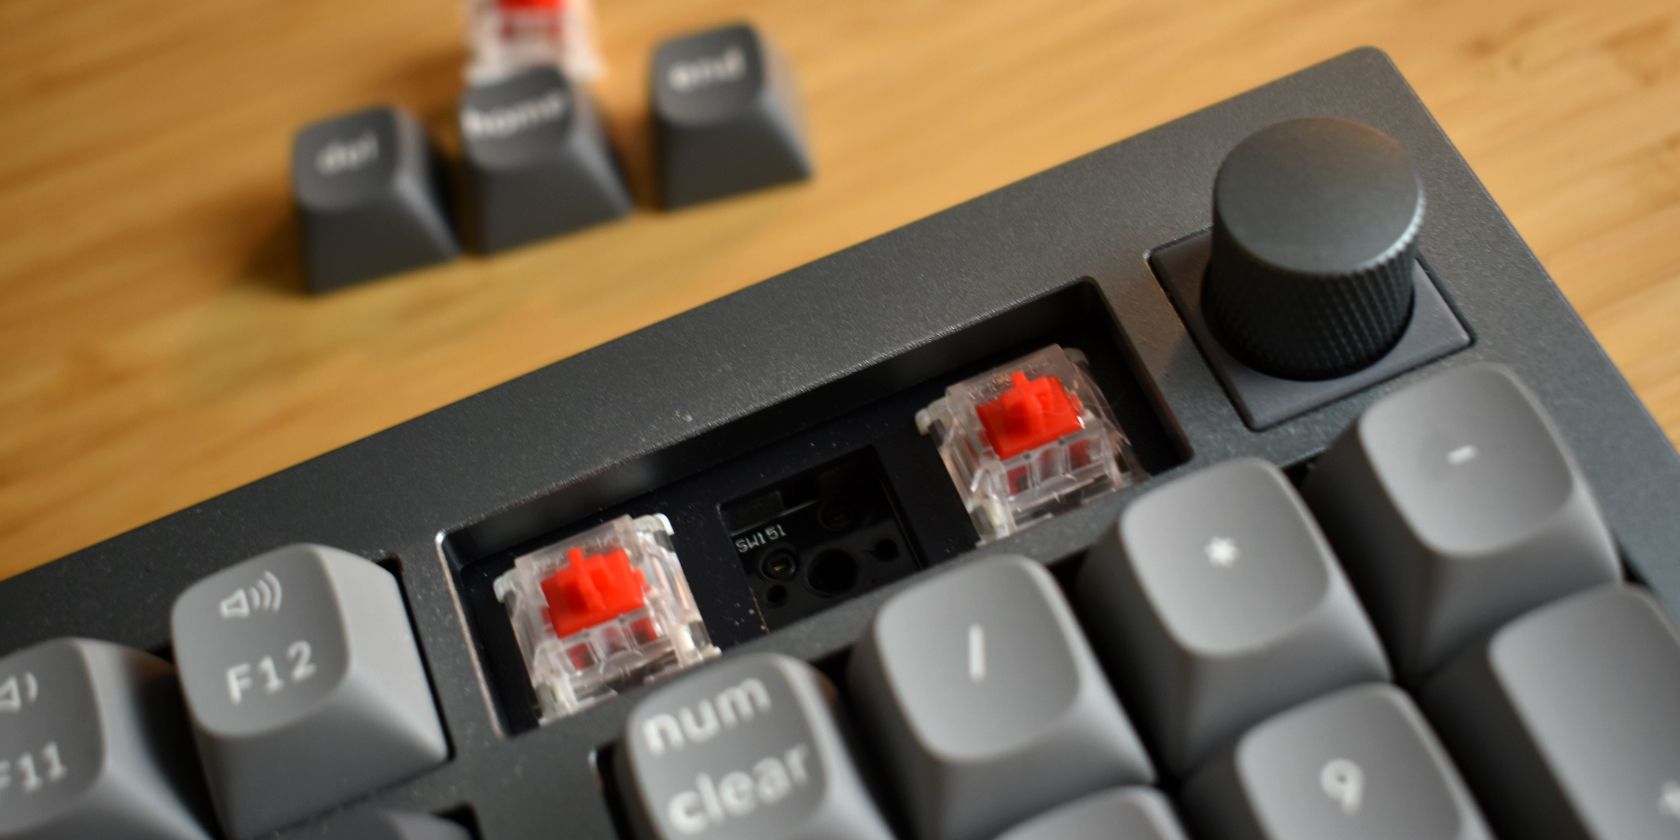 keychron q5 keyboard removing switches